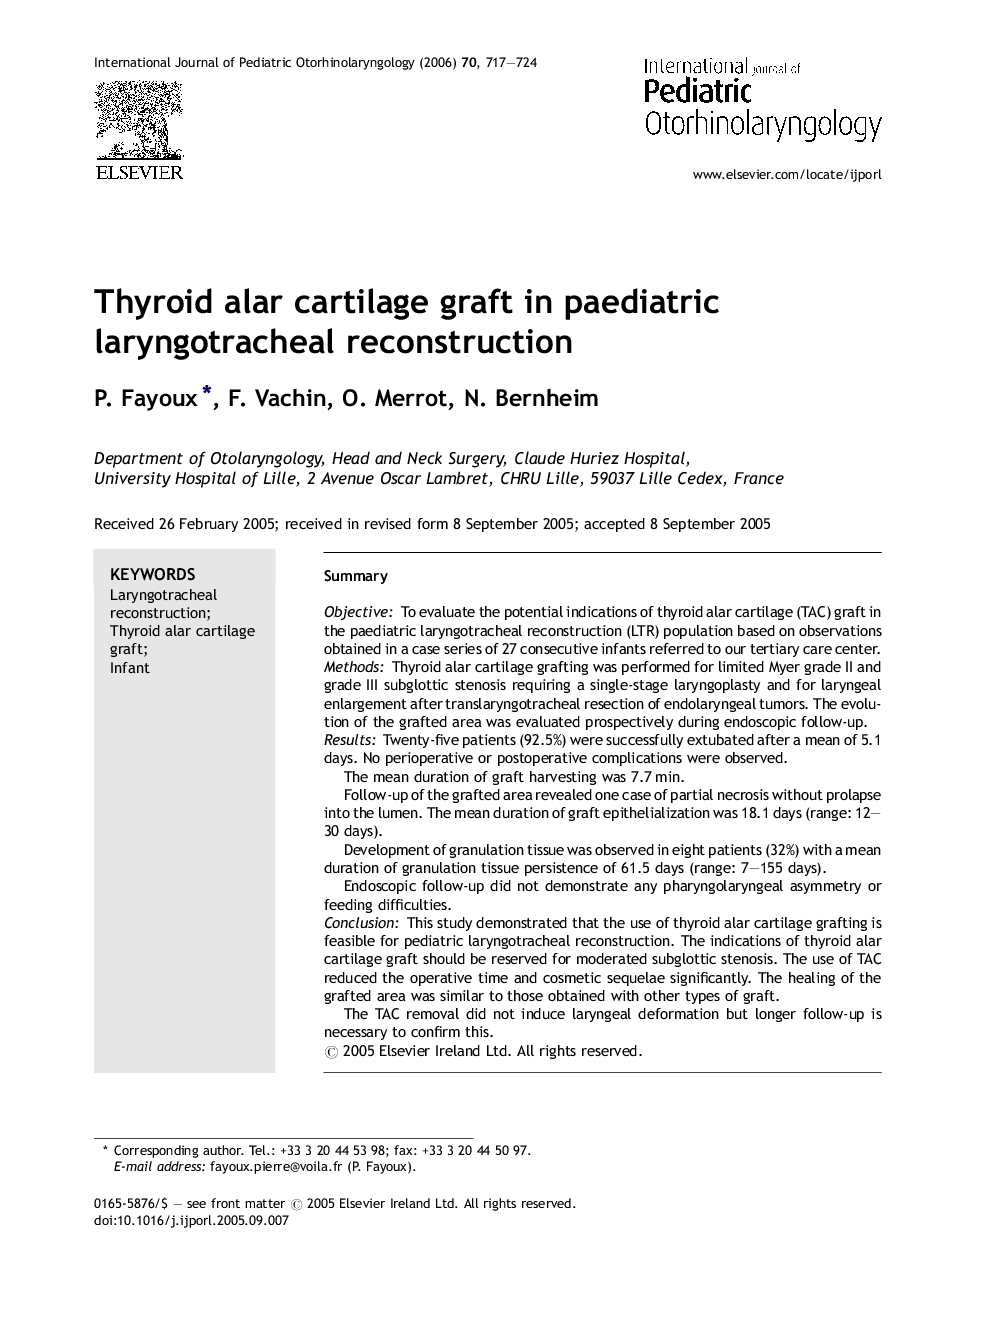 Thyroid alar cartilage graft in paediatric laryngotracheal reconstruction